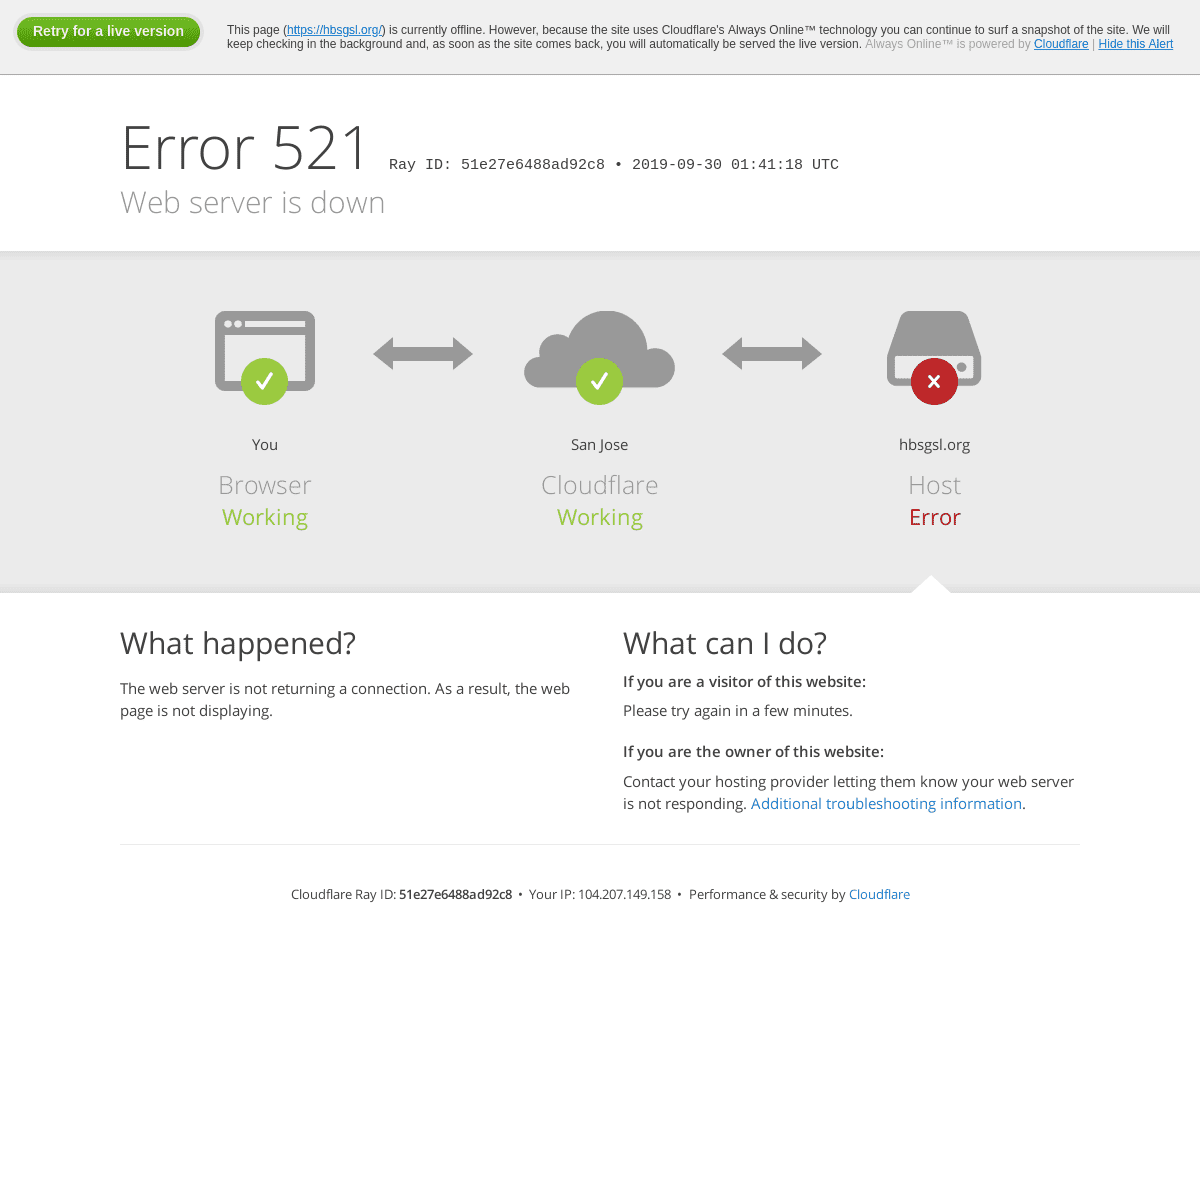 hbsgsl.org | 521: Web server is down